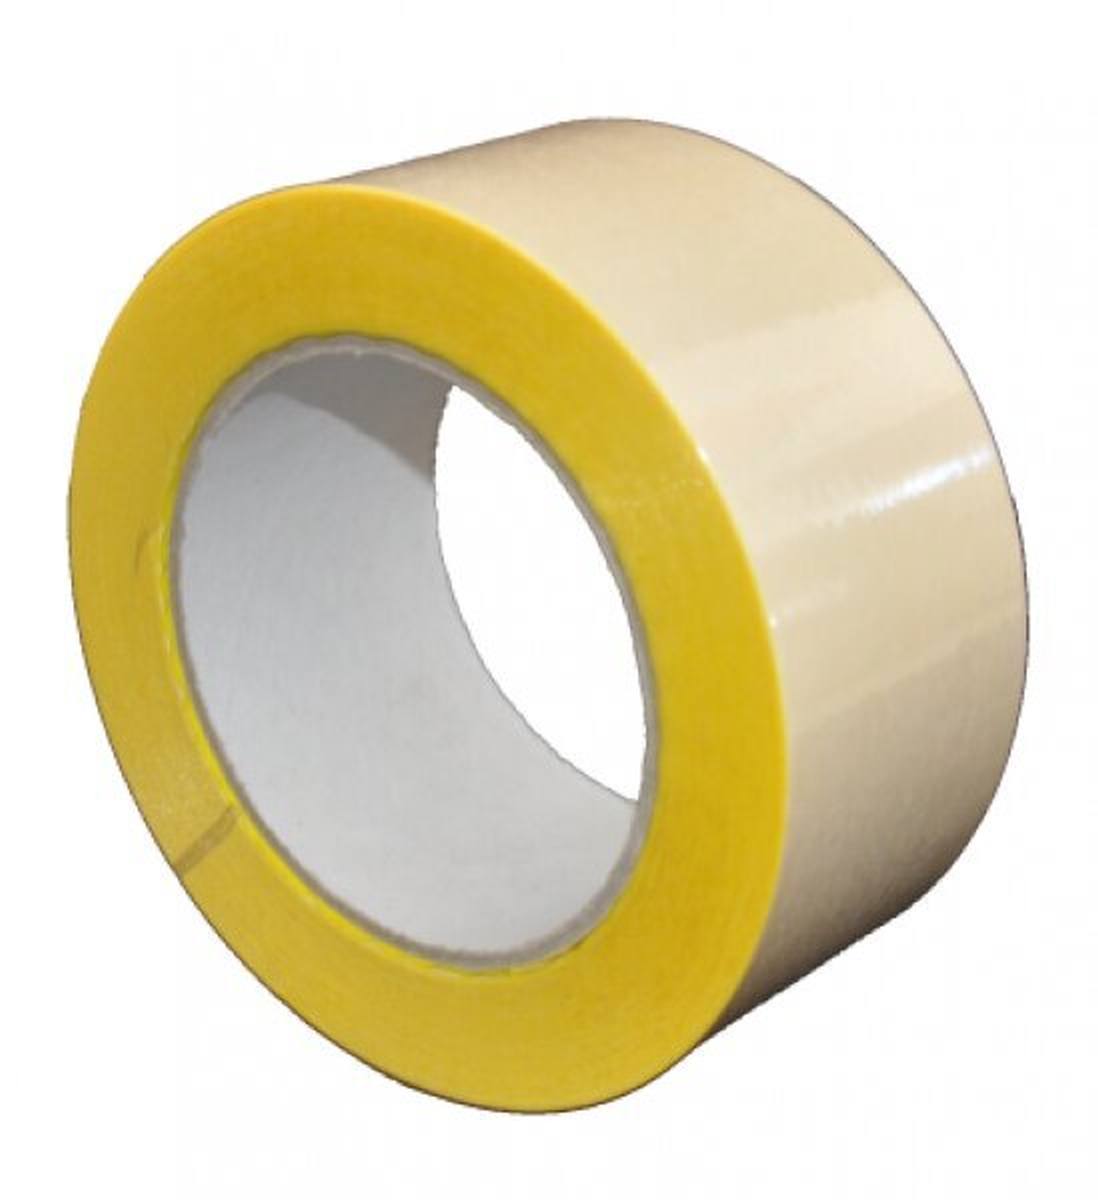 S-K-S 407 Cinta adhesiva de doble cara con soporte de polipropileno, adhesivo fuerte / débil, amarillo, 150 mm x 50 m, 0,15 mm